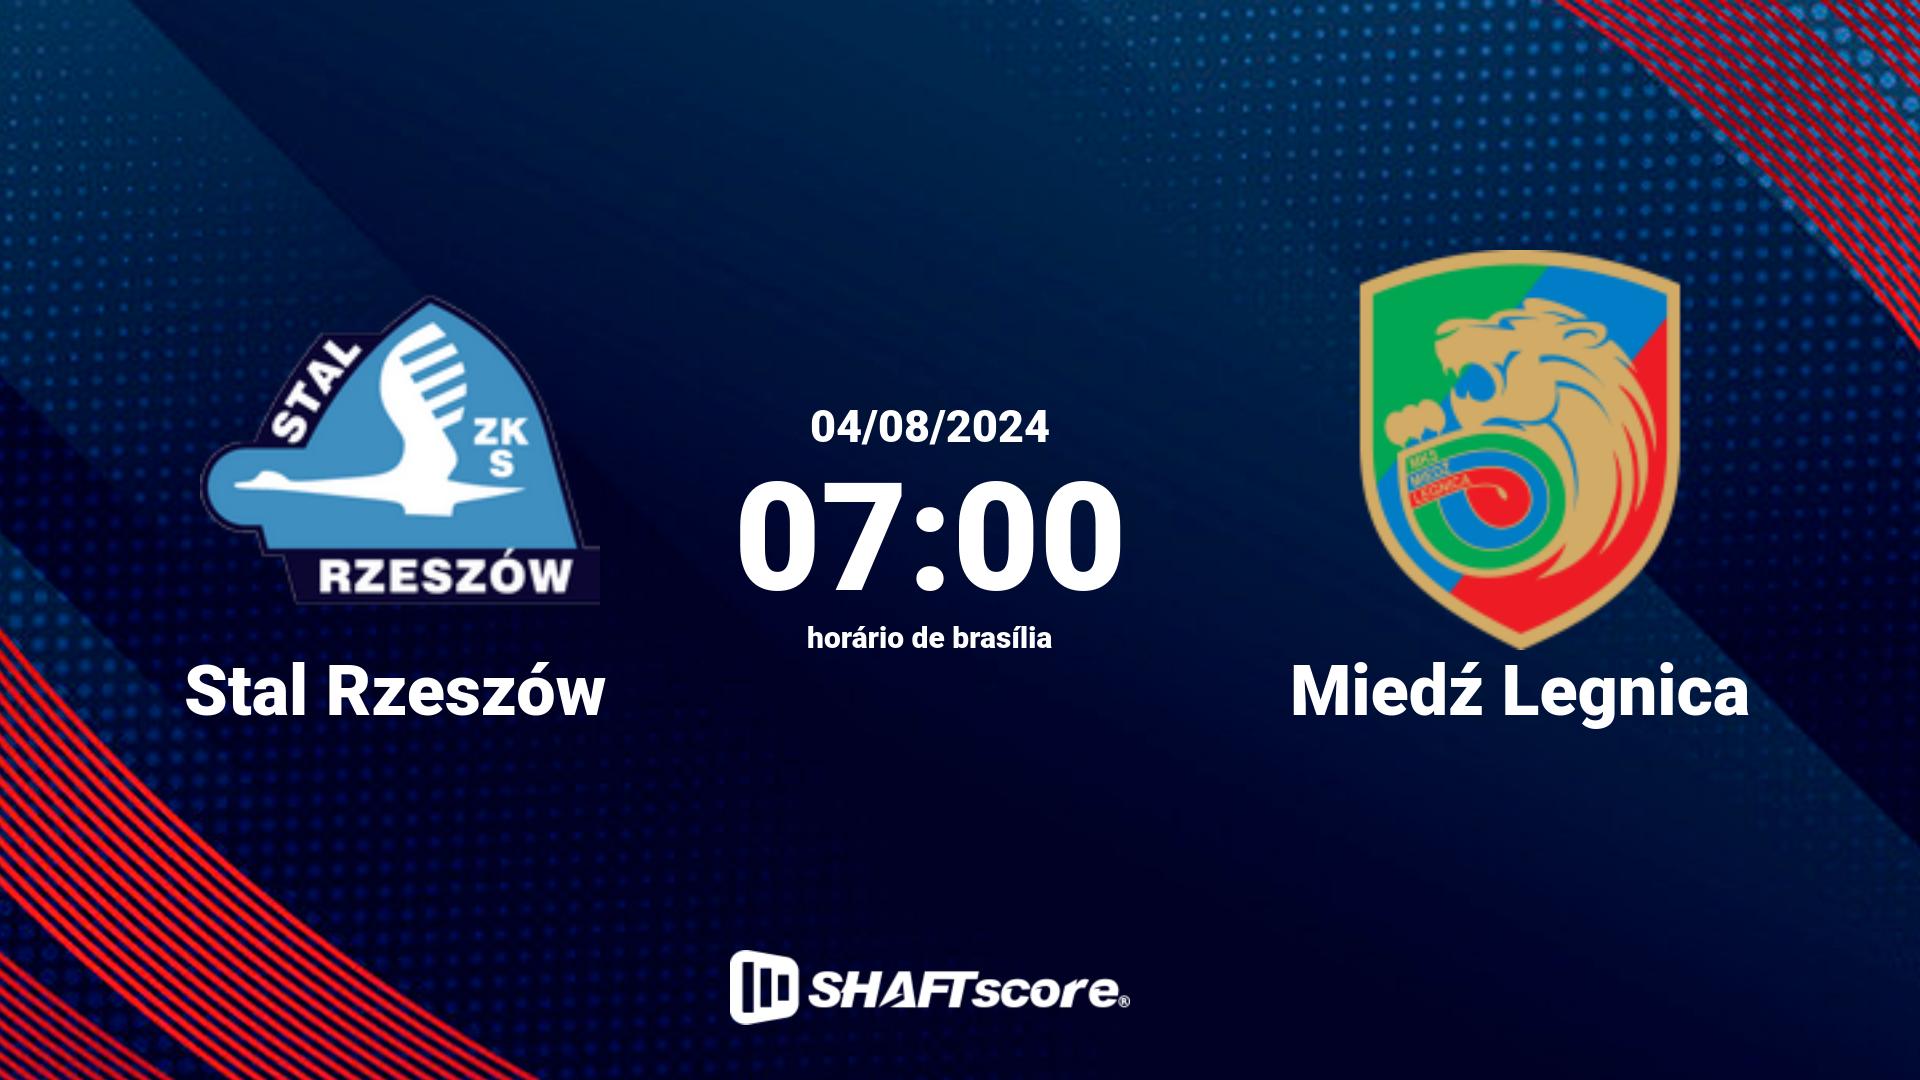 Estatísticas do jogo Stal Rzeszów vs Miedź Legnica 04.08 07:00